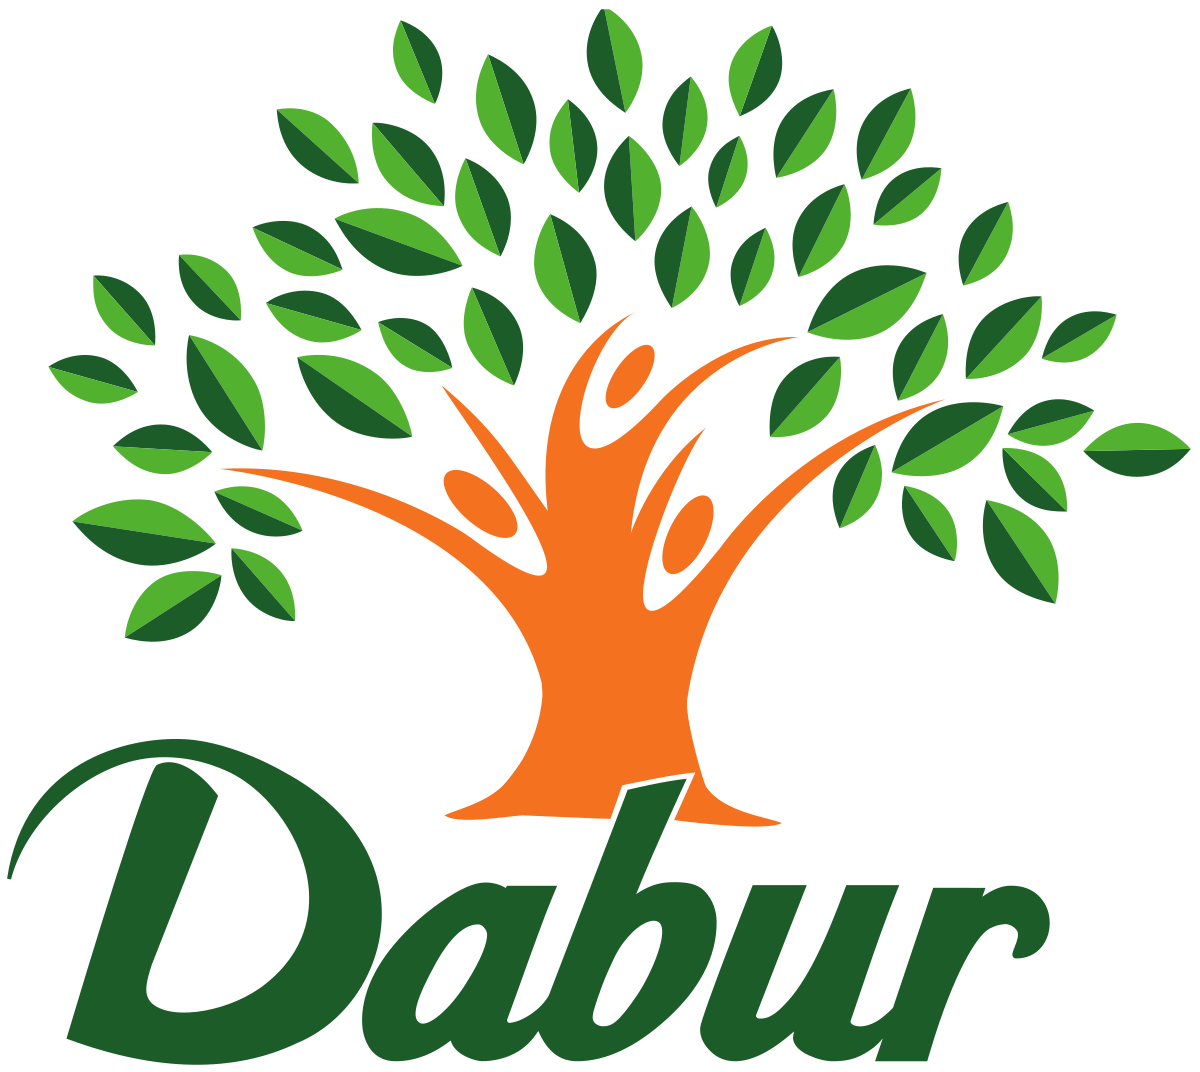 1200px-Dabur_Logo.svg.png